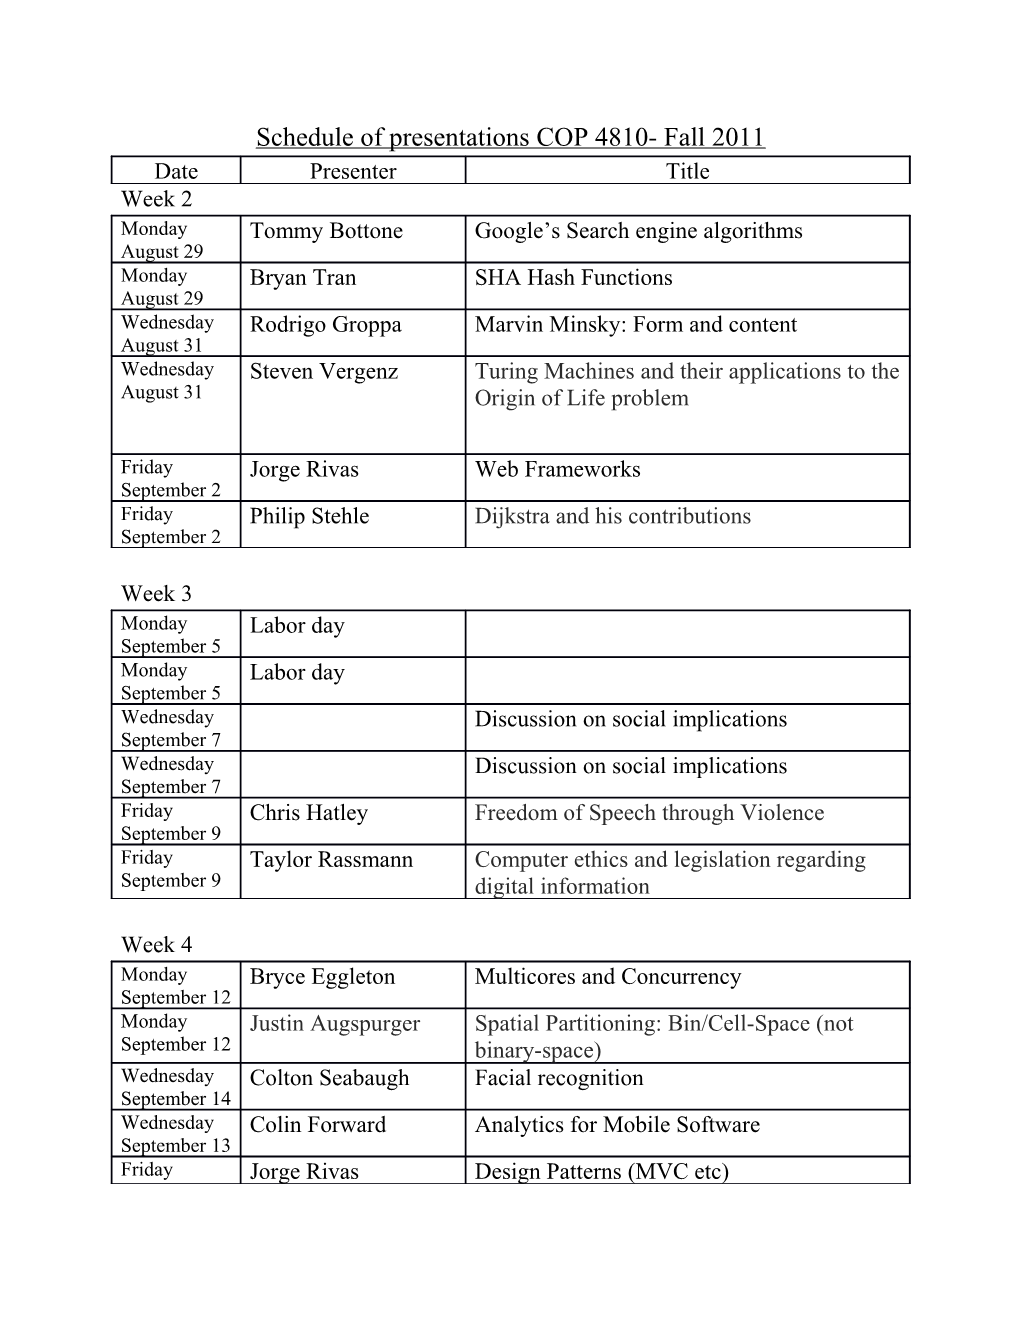 Schedule of Presentations COP 4810-Fall 2011